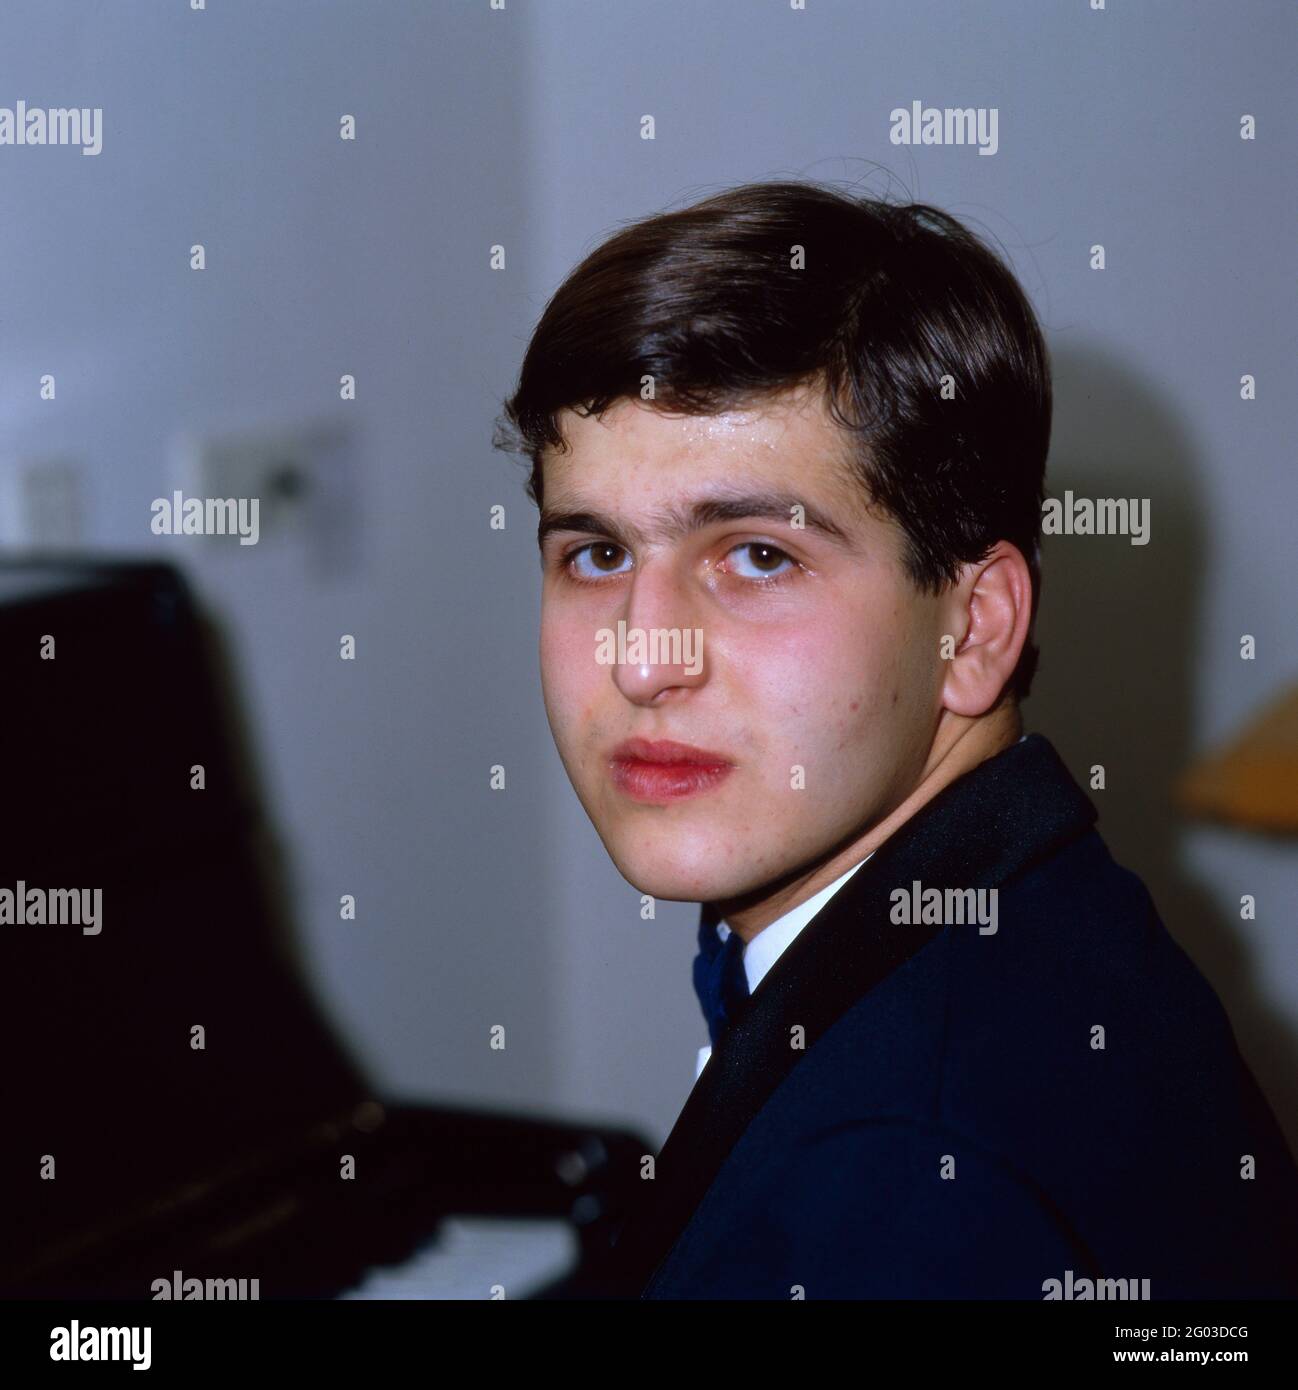 Dimitris Sgouros, griechischer Pianist, Portrait 1986. Dimitris Sgouros, Greek pianist, portrait 1986. Stock Photo